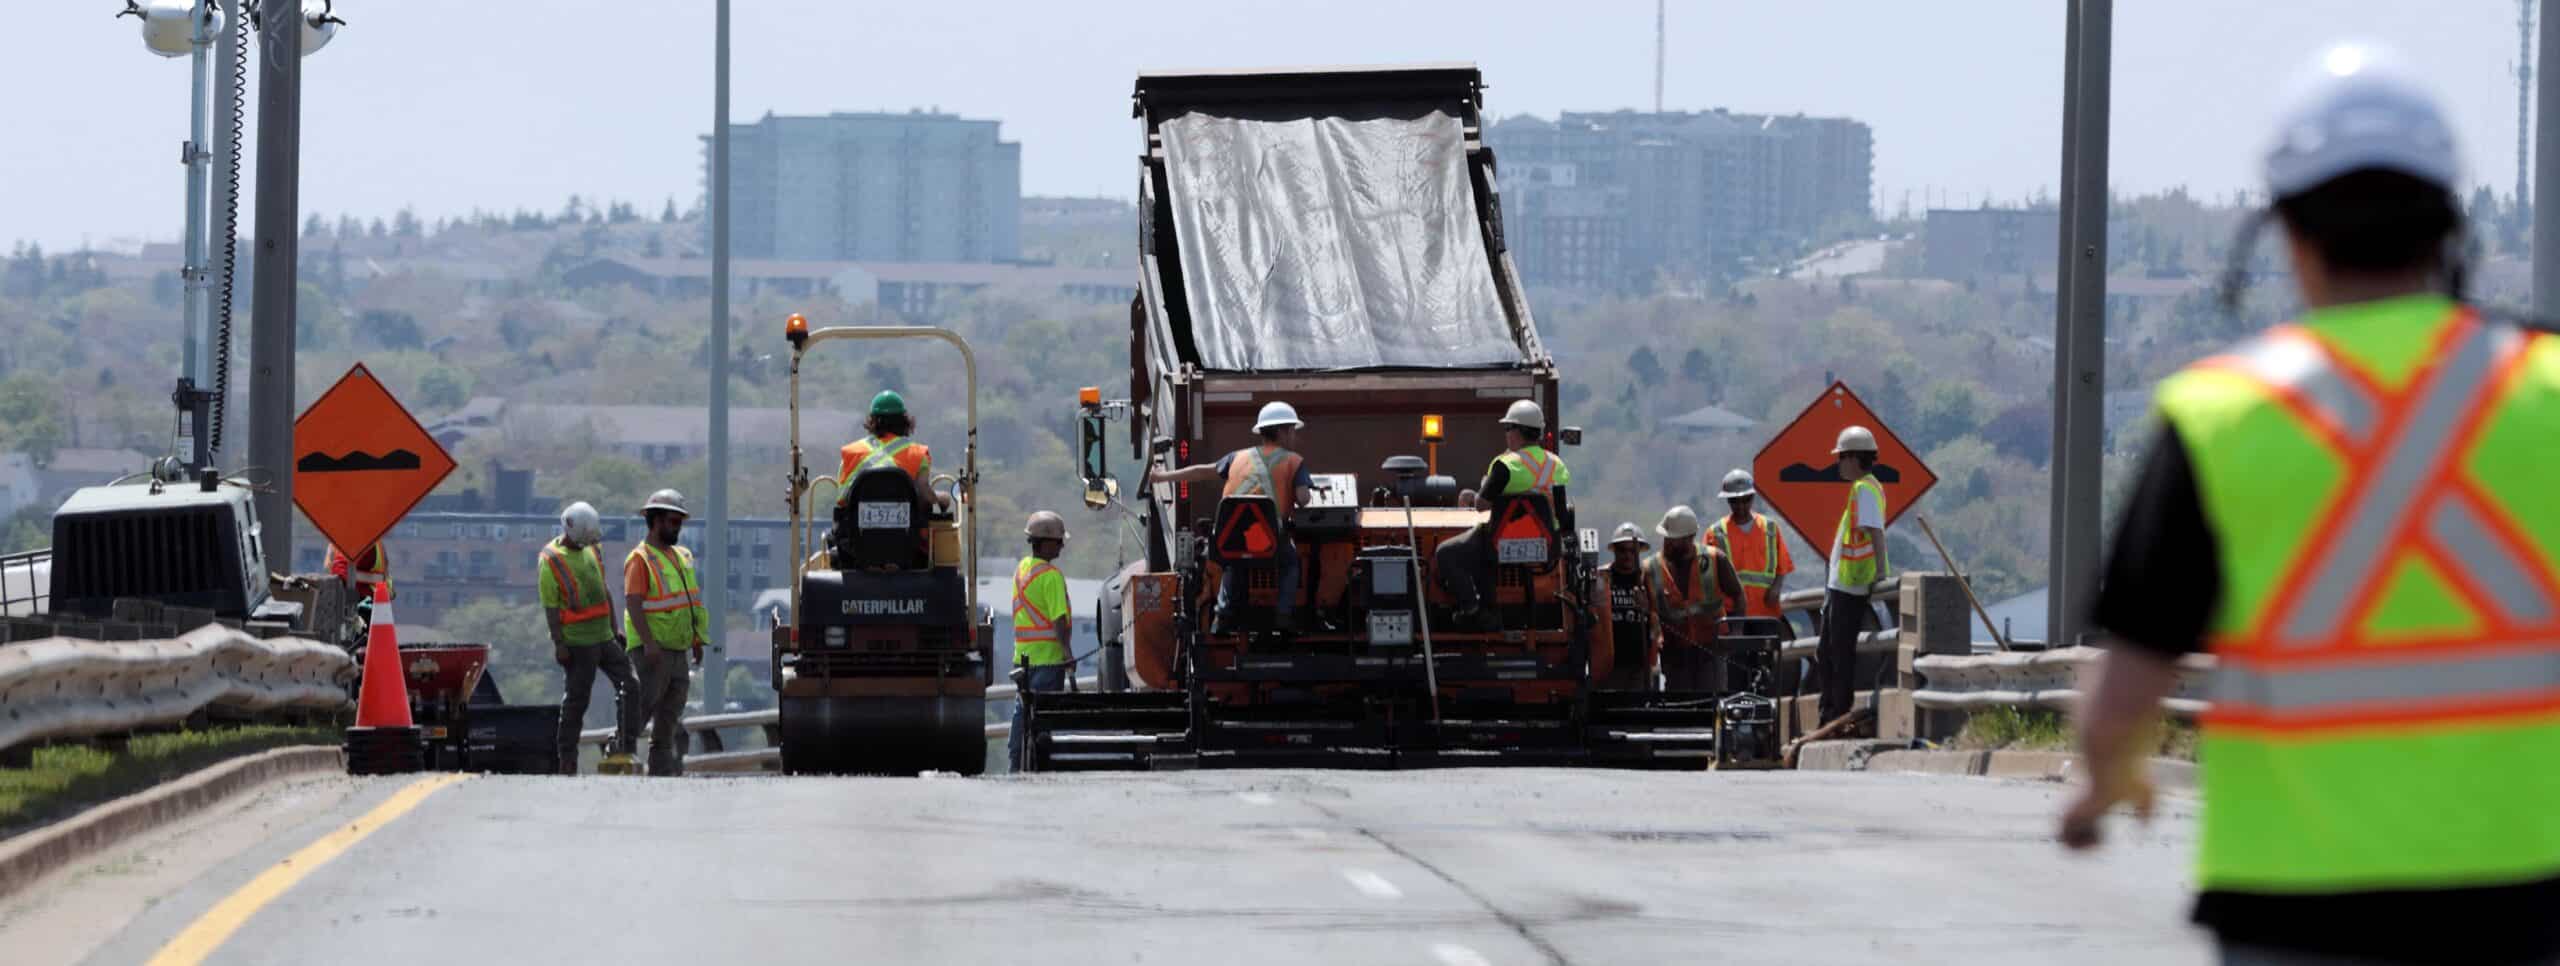 Paving crews roll asphalt on a section of roadway near the MacKay Bridge.